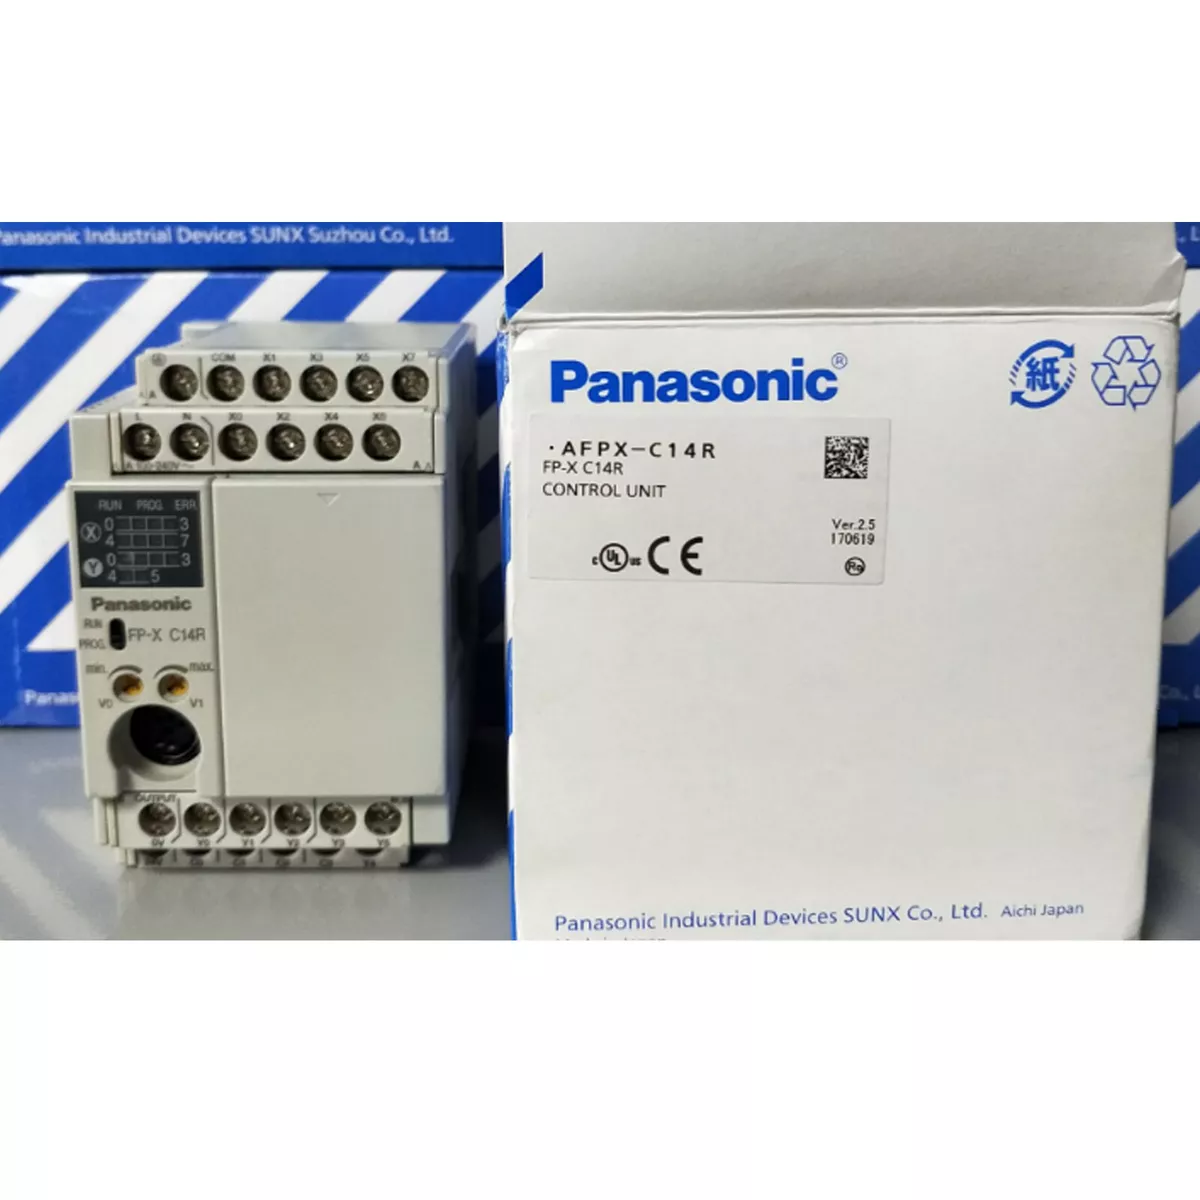 New In Box PANASONIC AFPX-C14R (FP-X C14R) Control Unit